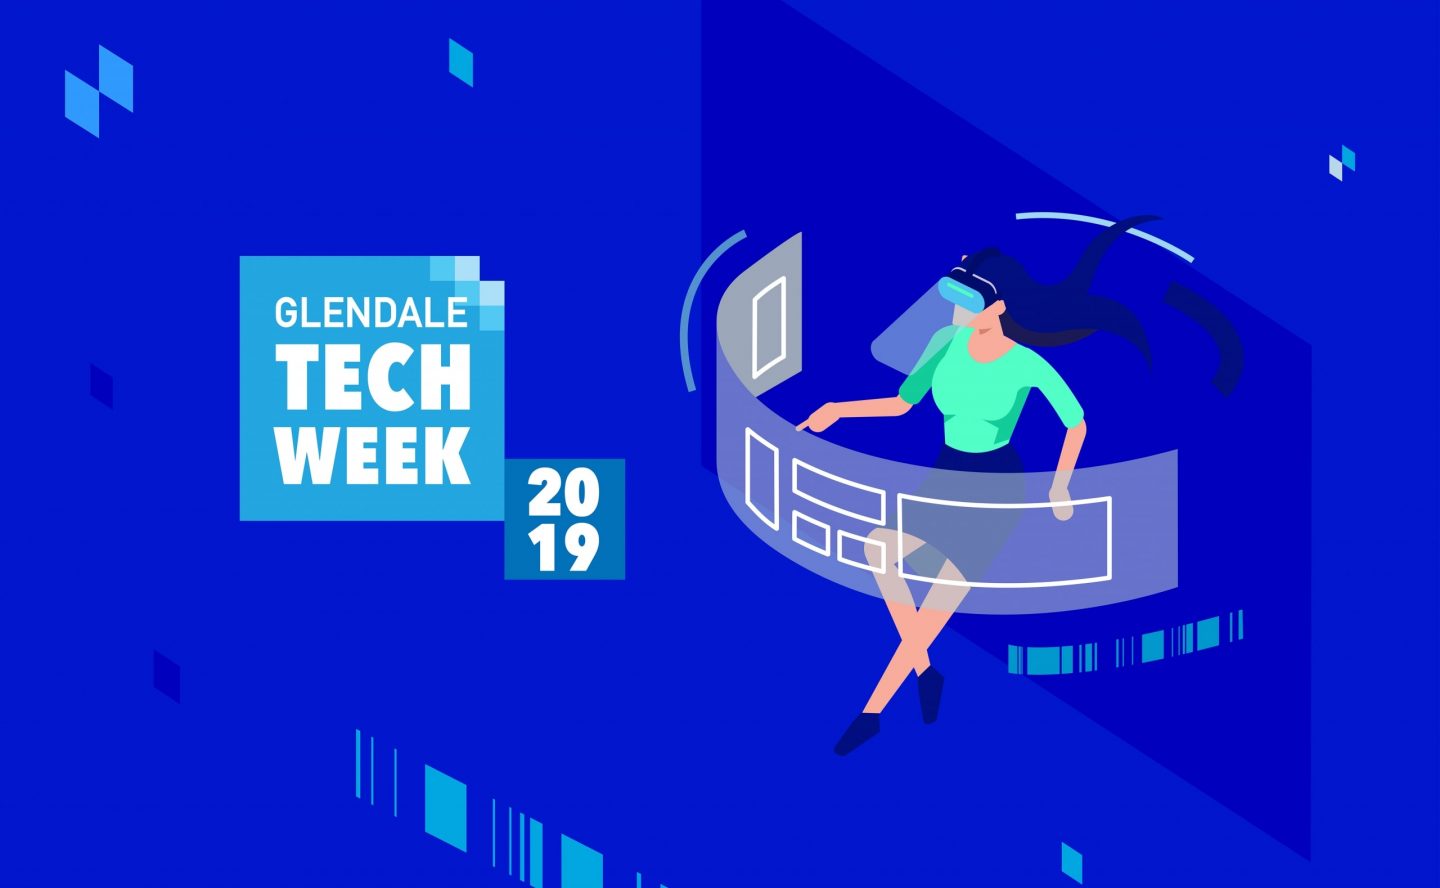 Glendale Tech Week logo event